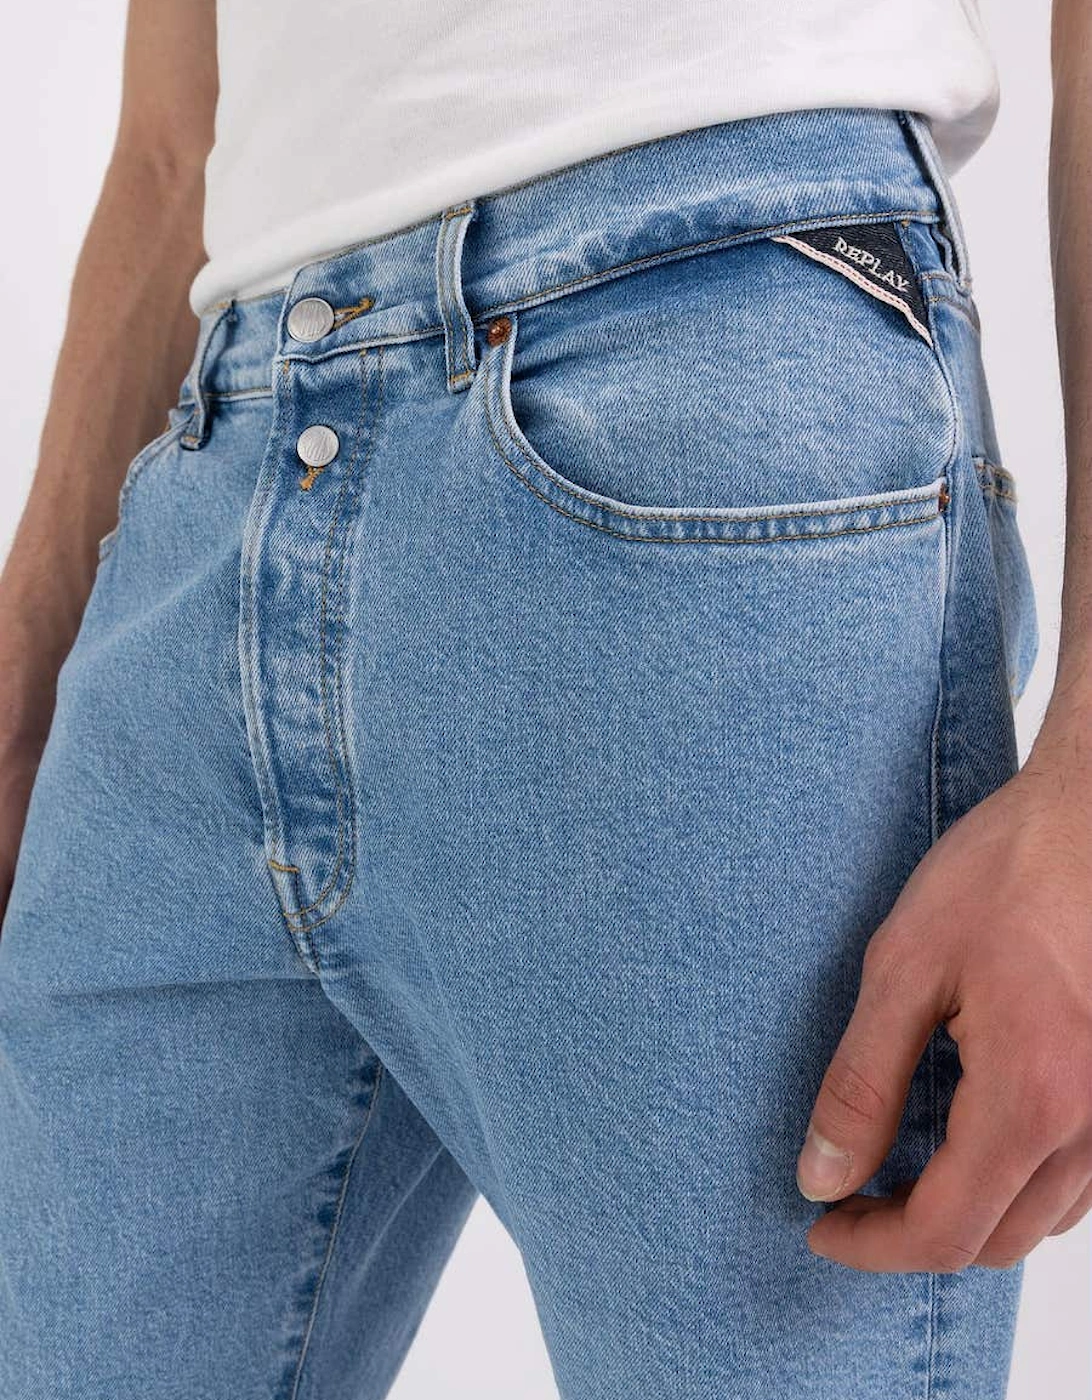 9Zero1 Straight Fit Jeans